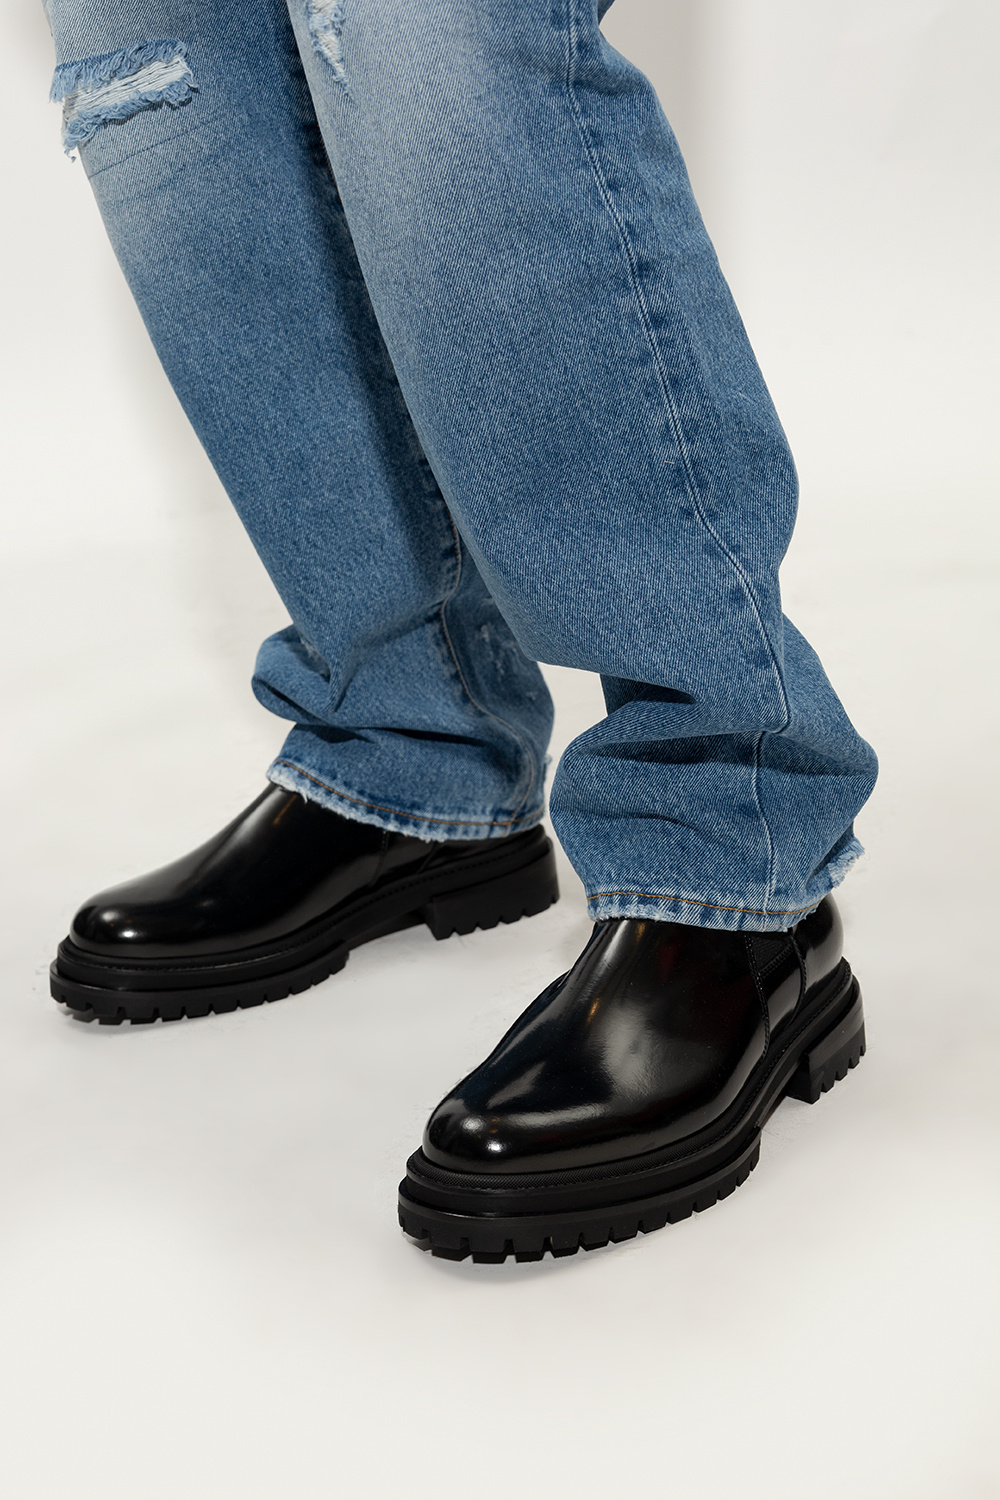 Black Leather boots 424 KR